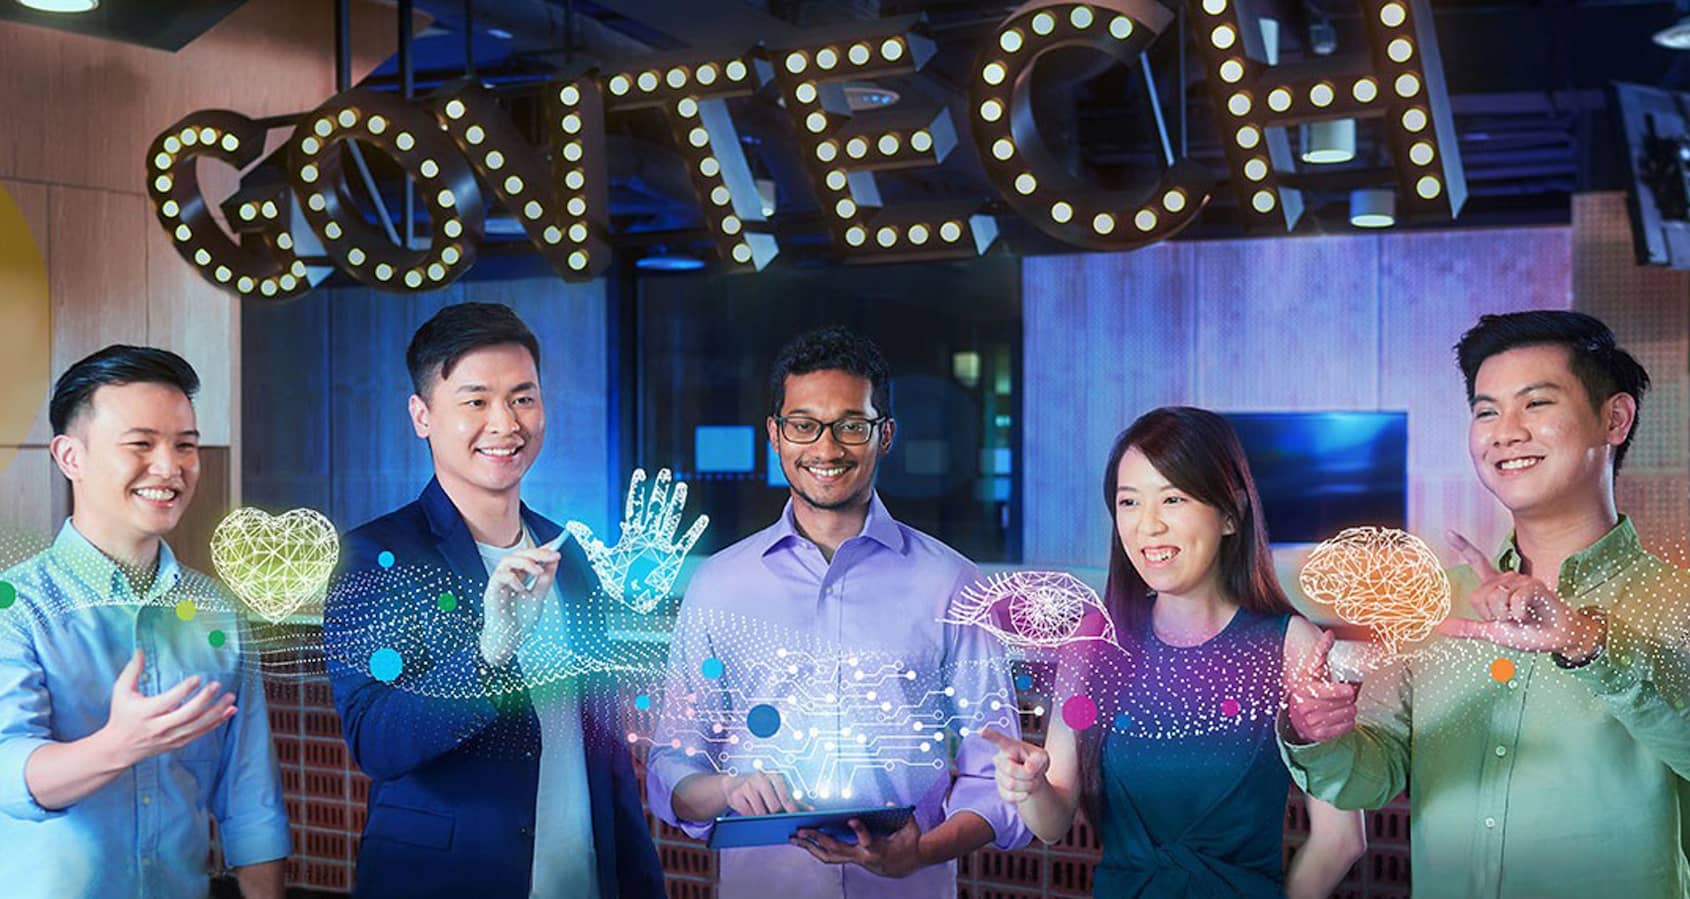 GovTechies paving the way to make Singapore a Smart Nation through digital innovation